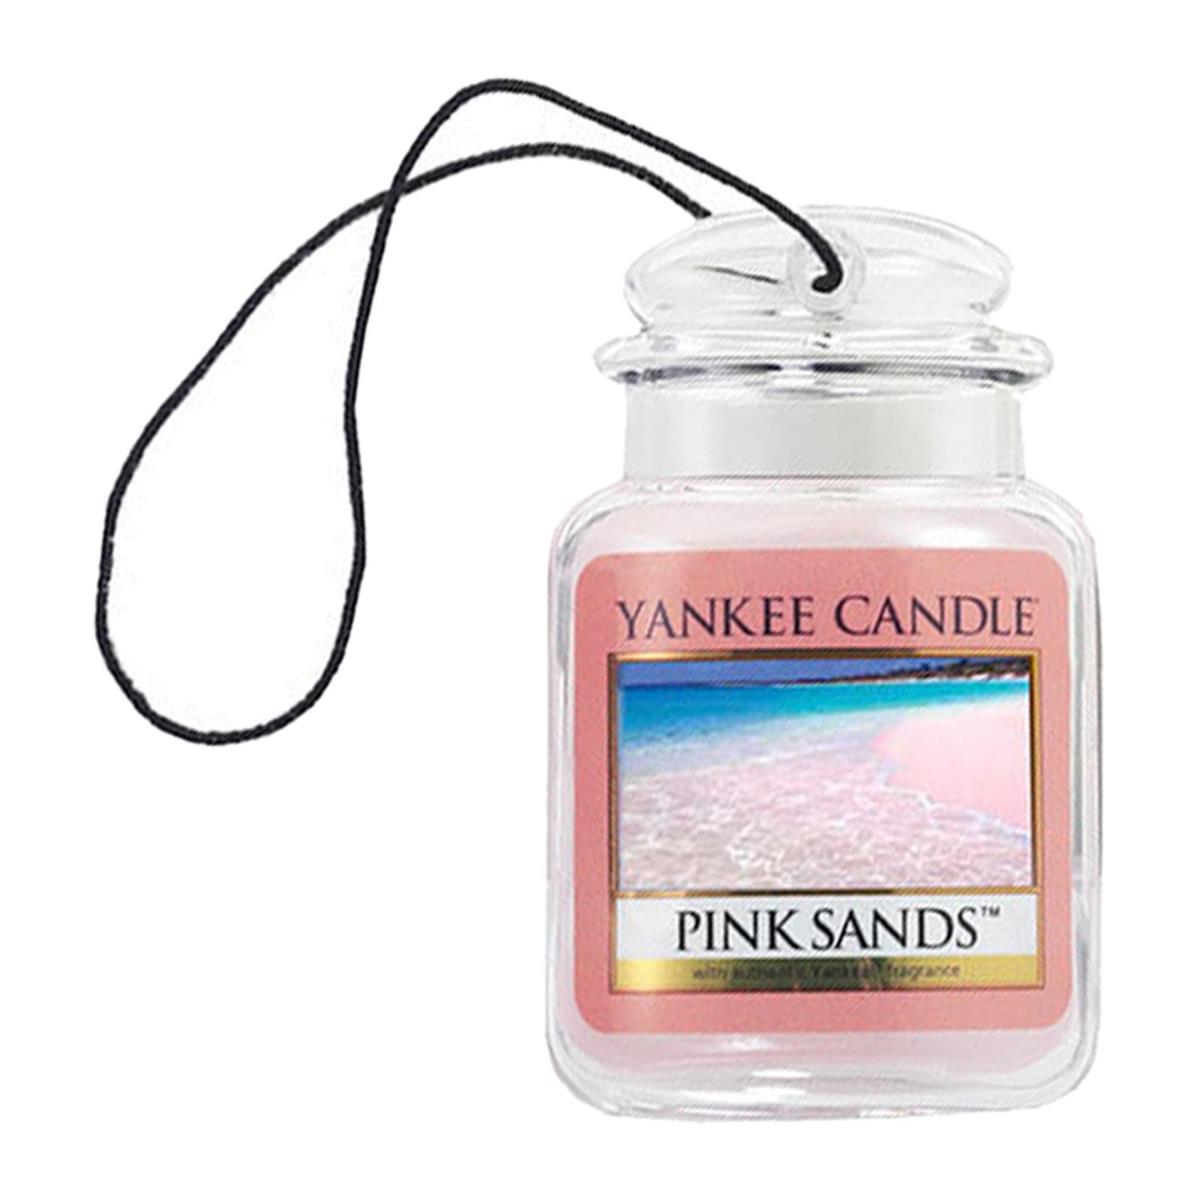 Yankee Candle Car Jar Ultimate Pink Sands - Profumo per auto